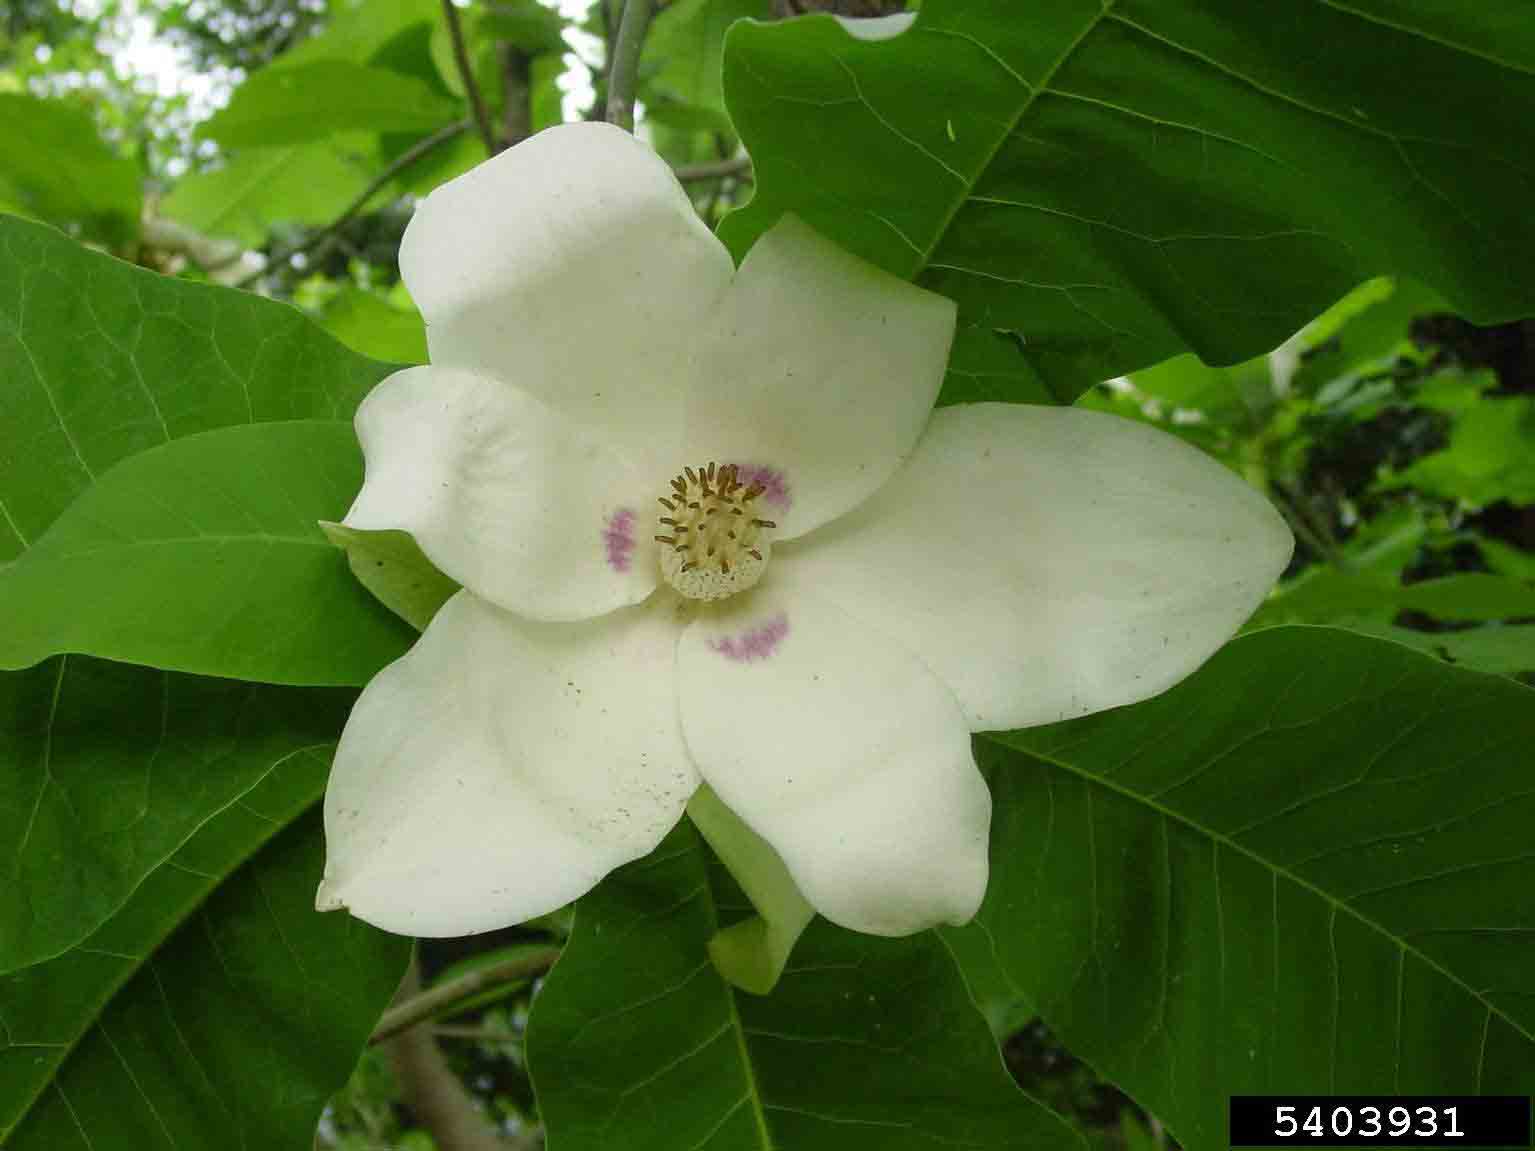 Bigleaf magnolia flower, 8"-10" across